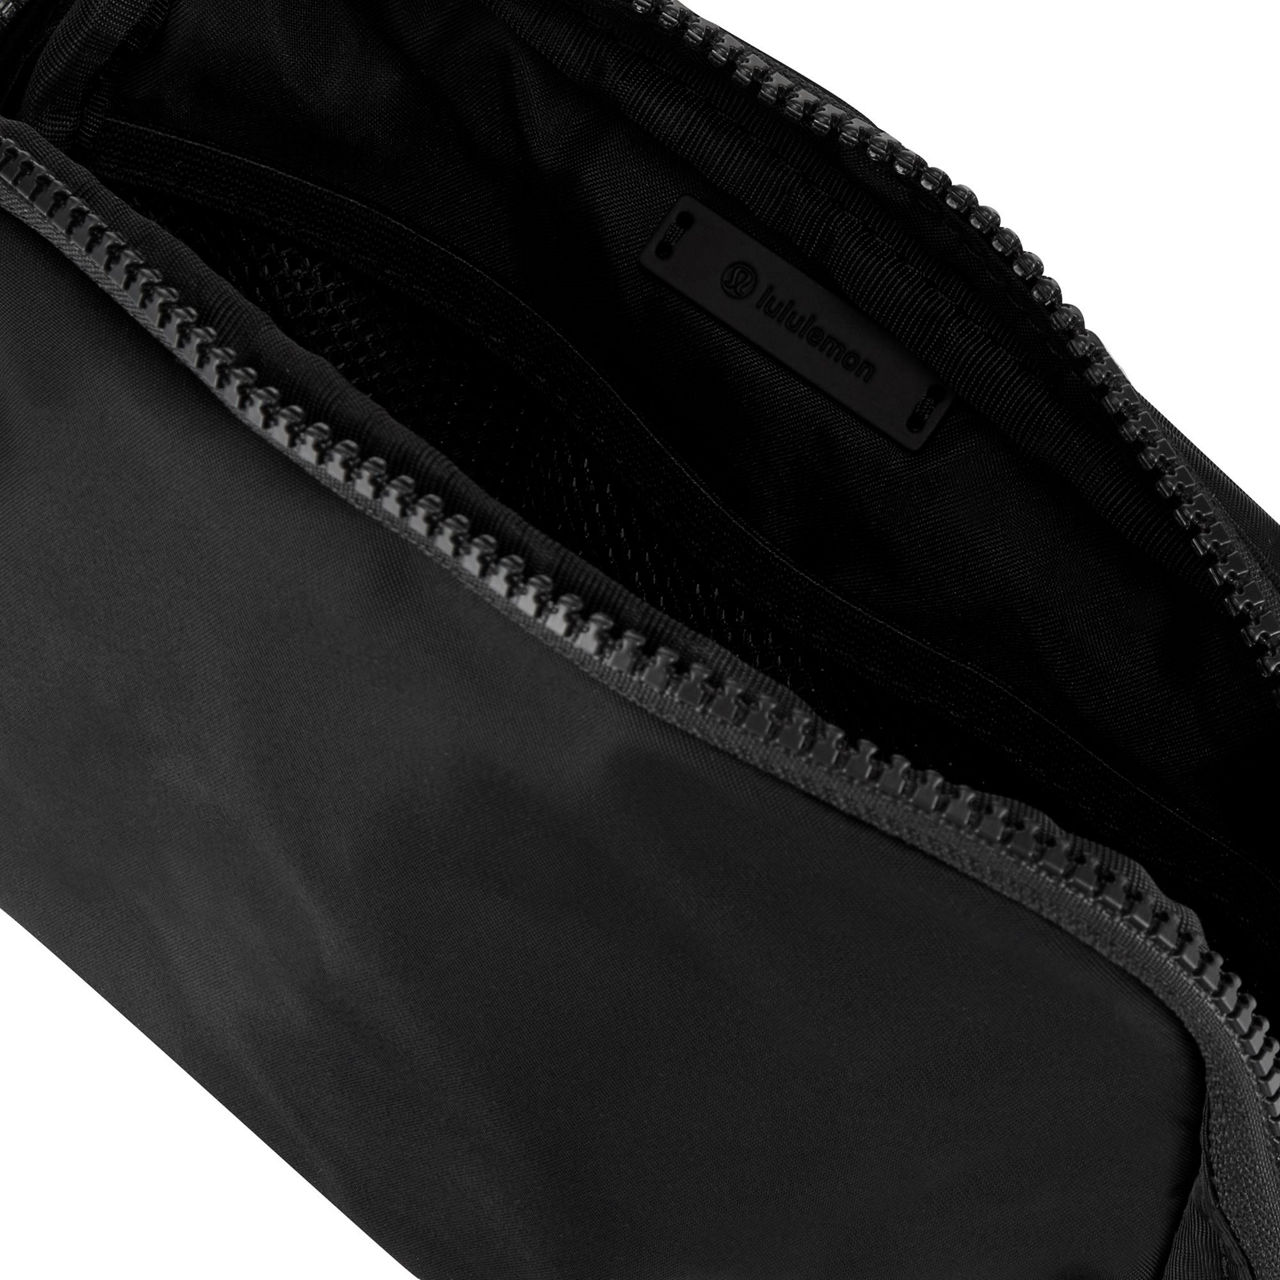 Lululemon Everywhere Belt Bag Crossbody Bag Black